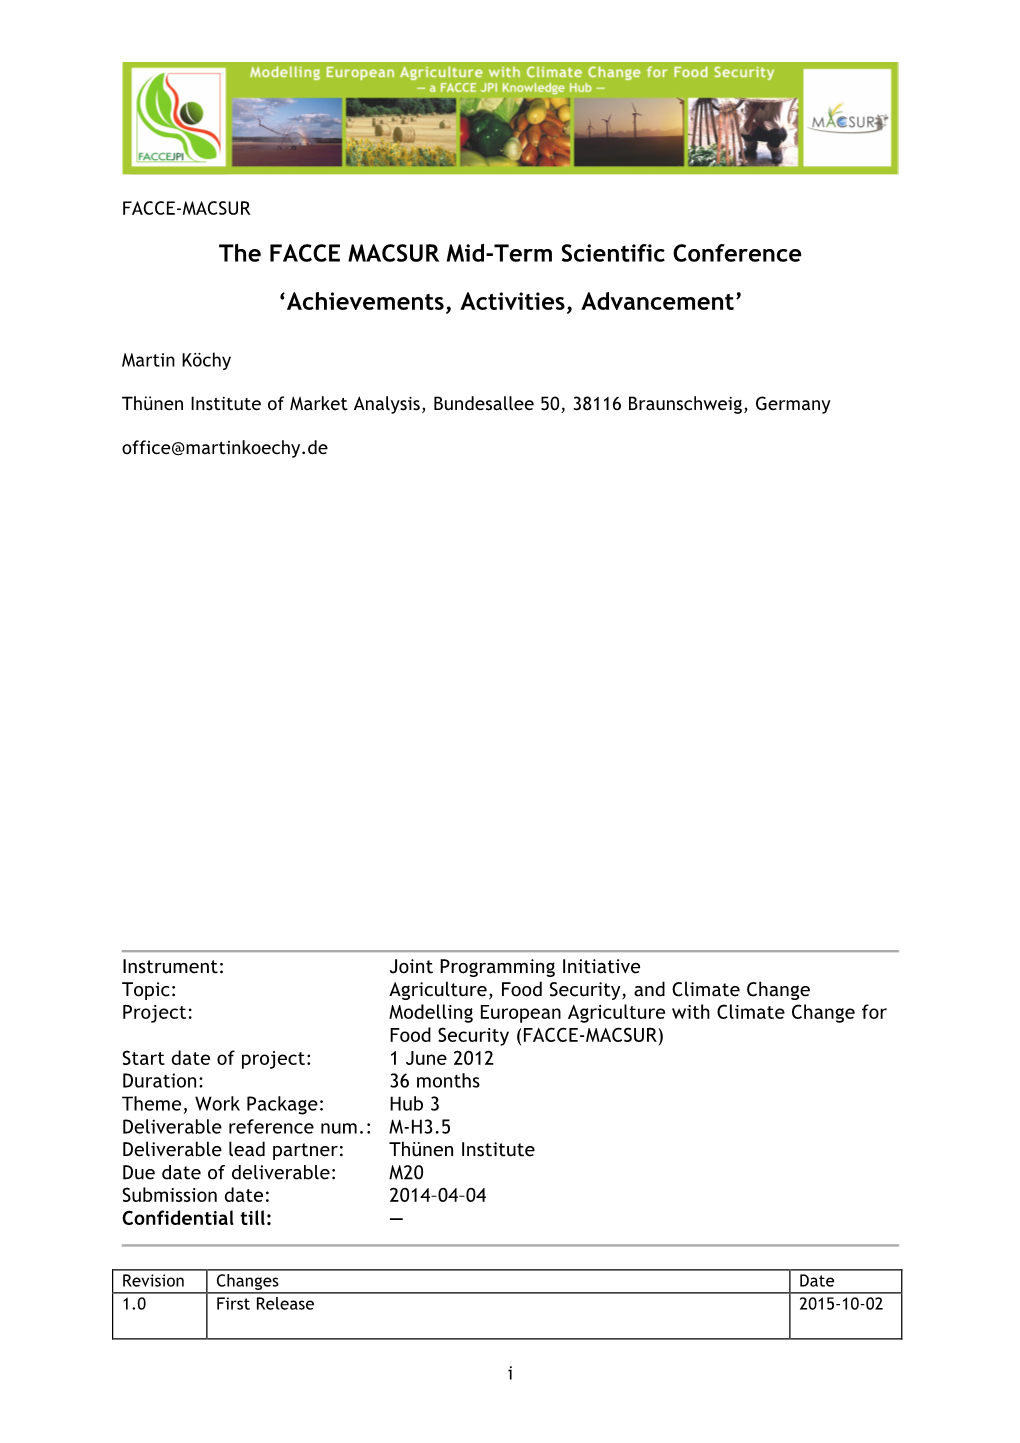 FACCE MACSUR Mid-Term Scientific Conference